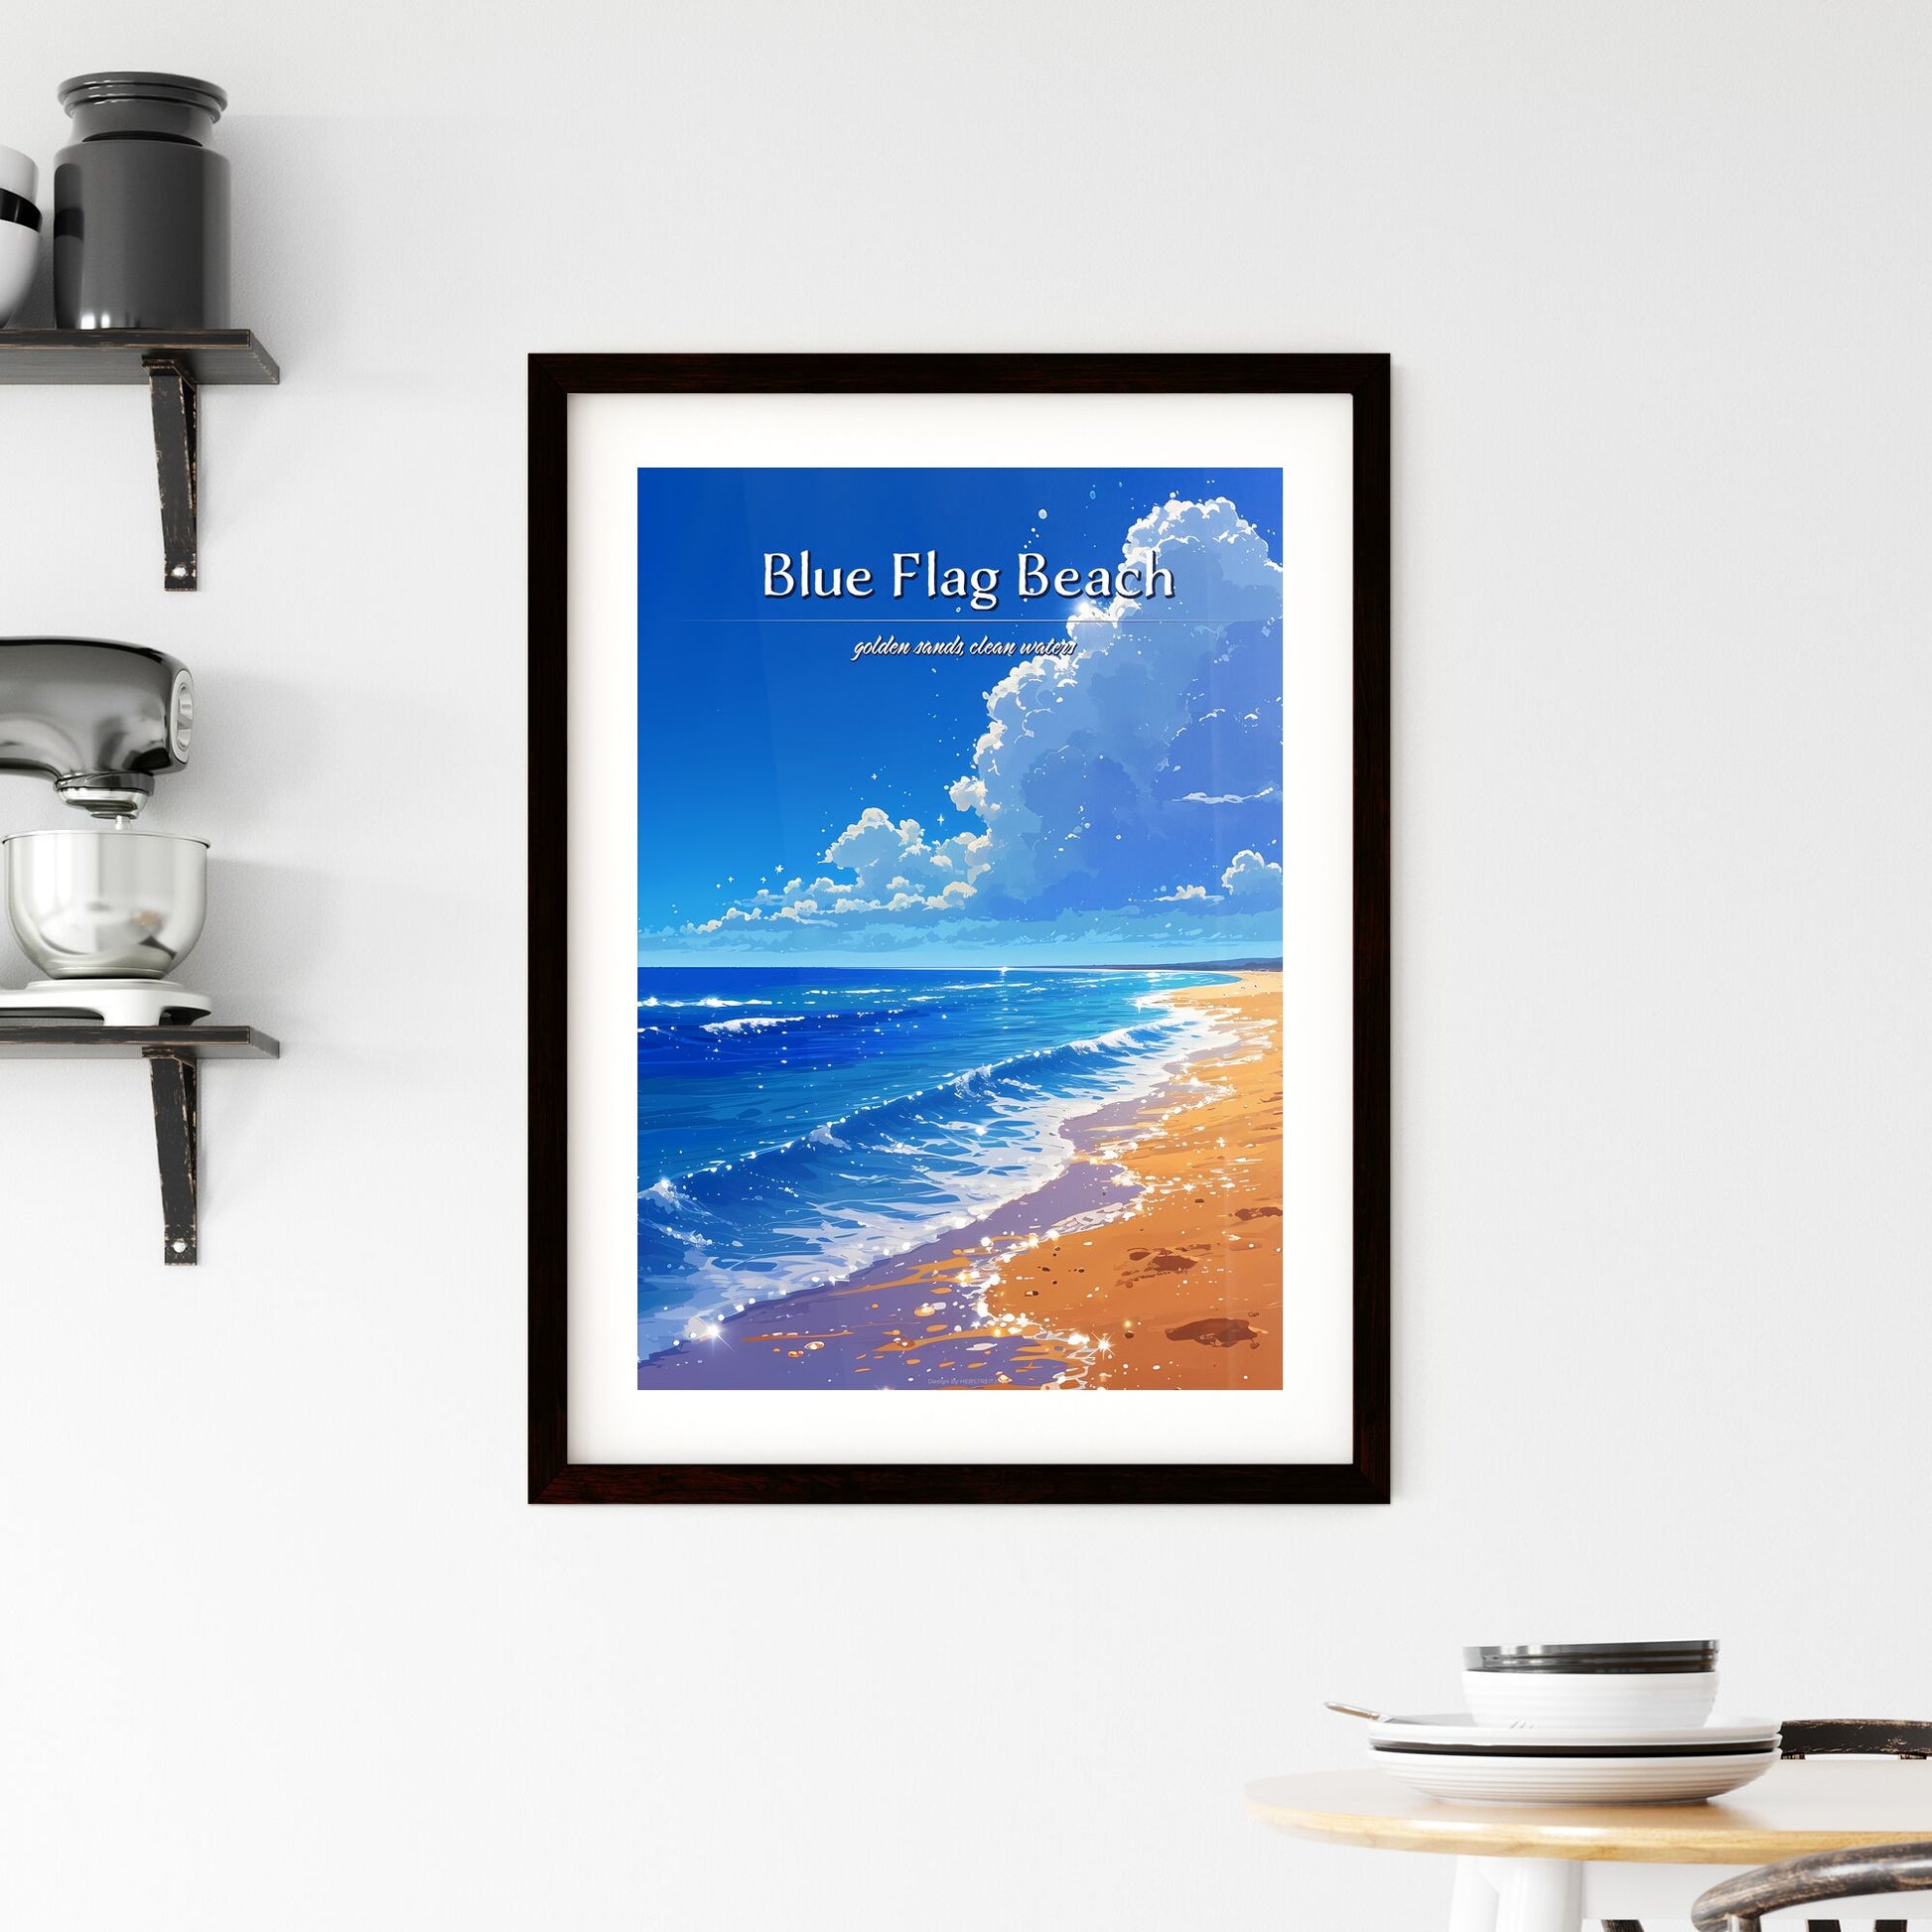 Blue Flag Beach - Art print of a beach with waves and blue sky Default Title